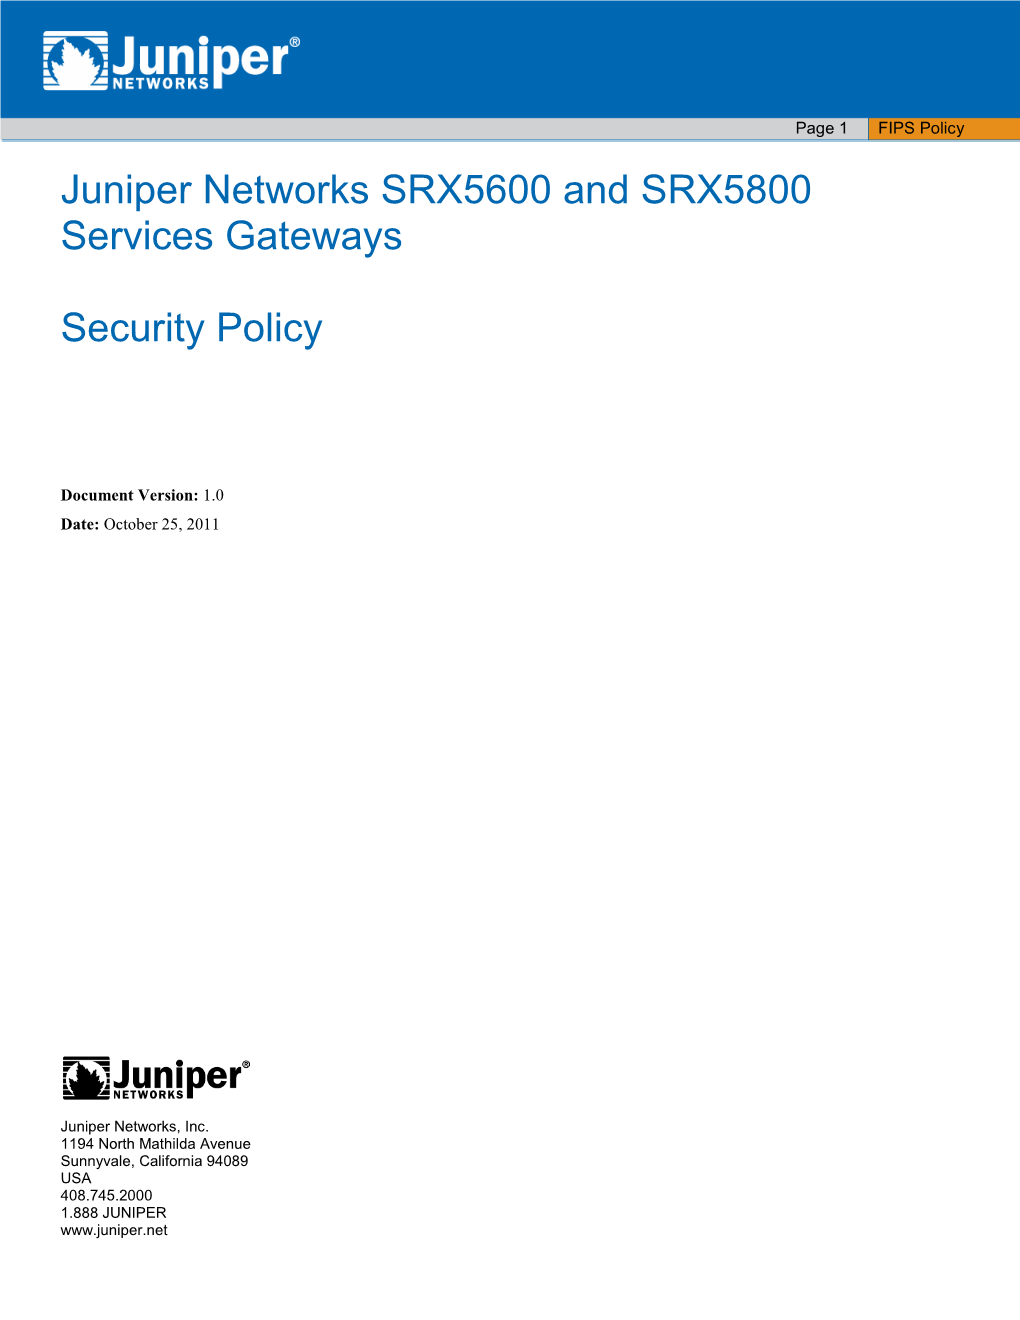 JUNOS Cryptographic Security Policy